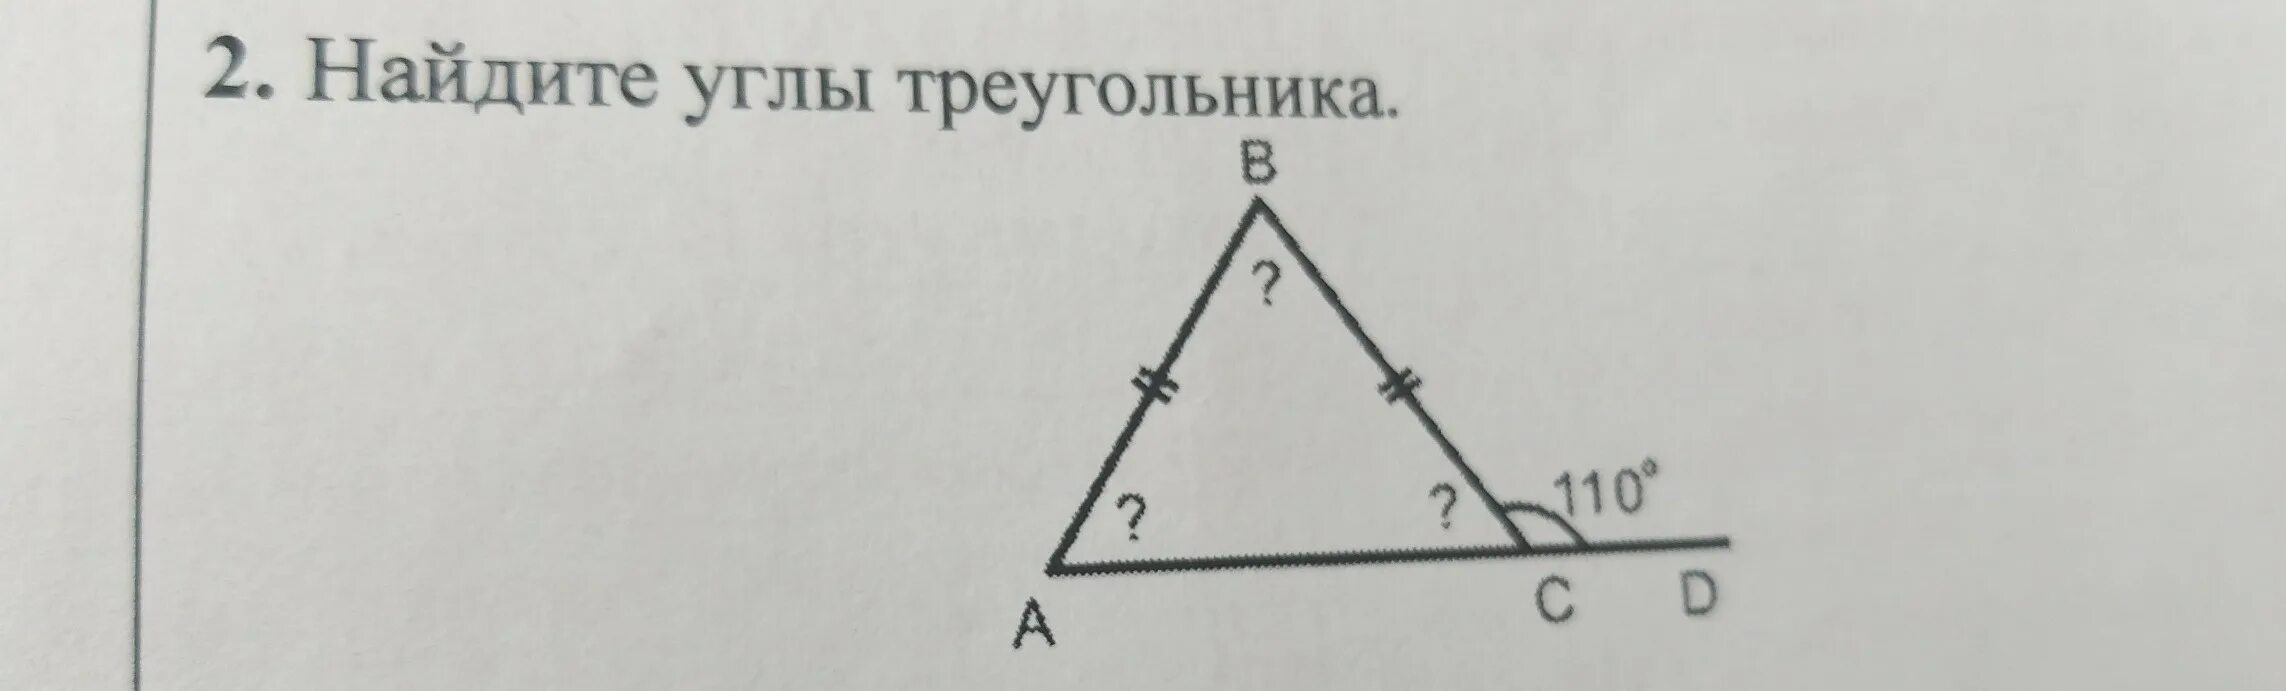 Найдите угол bmf рисунок 59. Найди угол треугольника. Найдите углы треугольника. По данным рисунка Найдите углы треугольника. Найдите углы треугольника (рис. 44.1)..